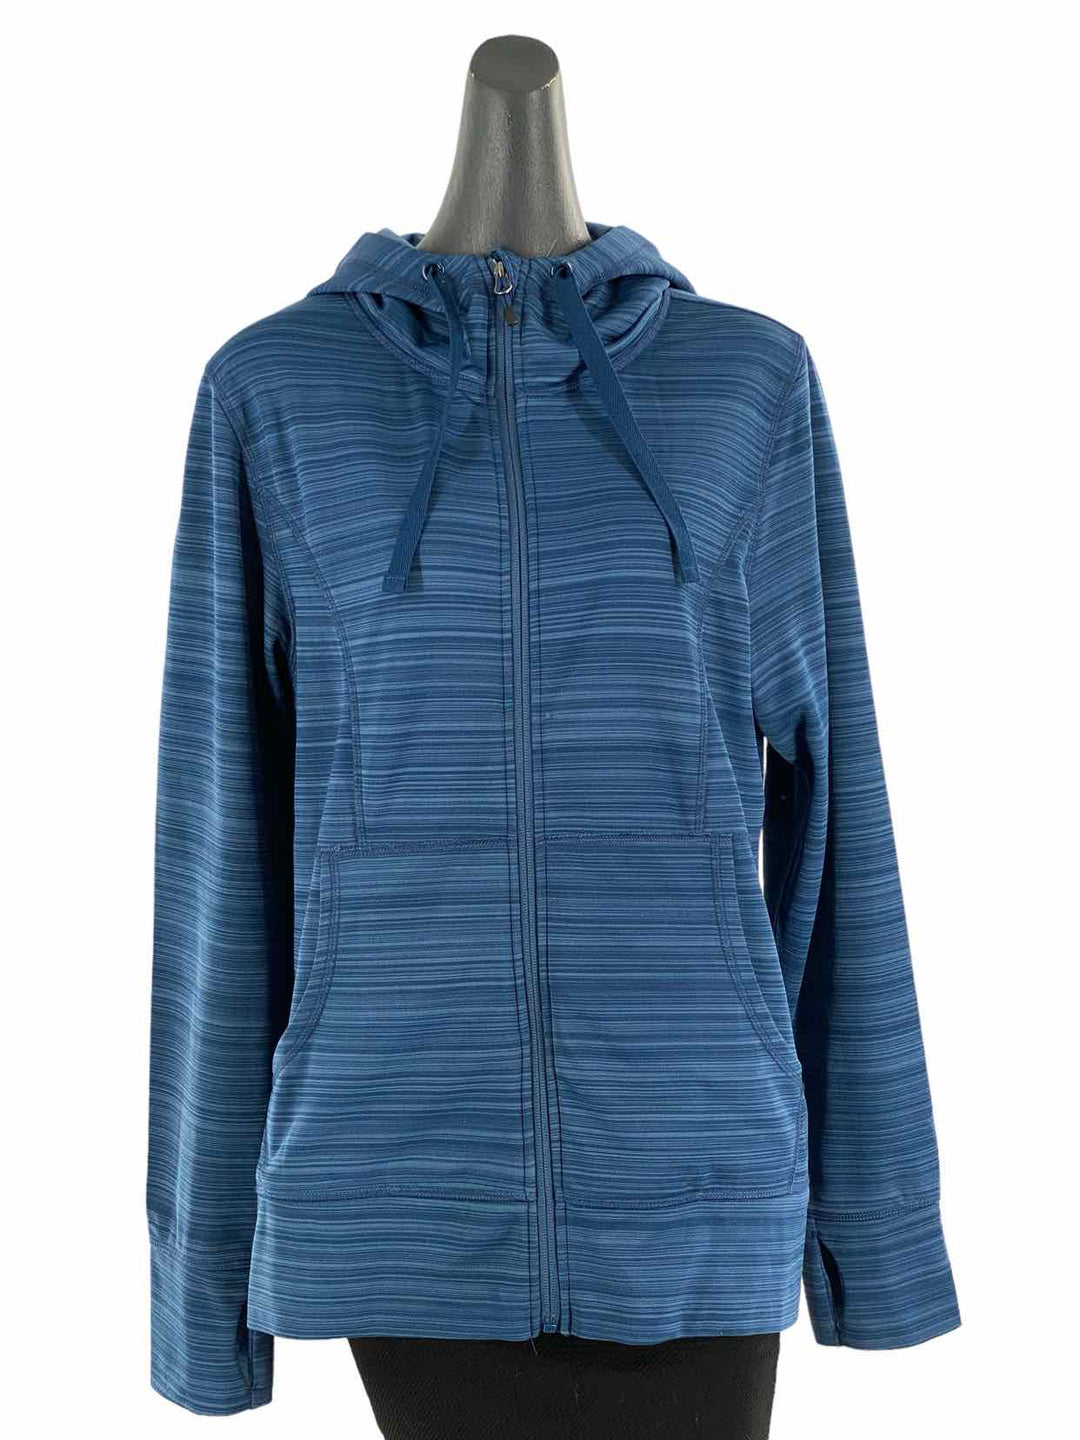 Stillwater Supply Size XL Blue Stripe Athletic Jacket